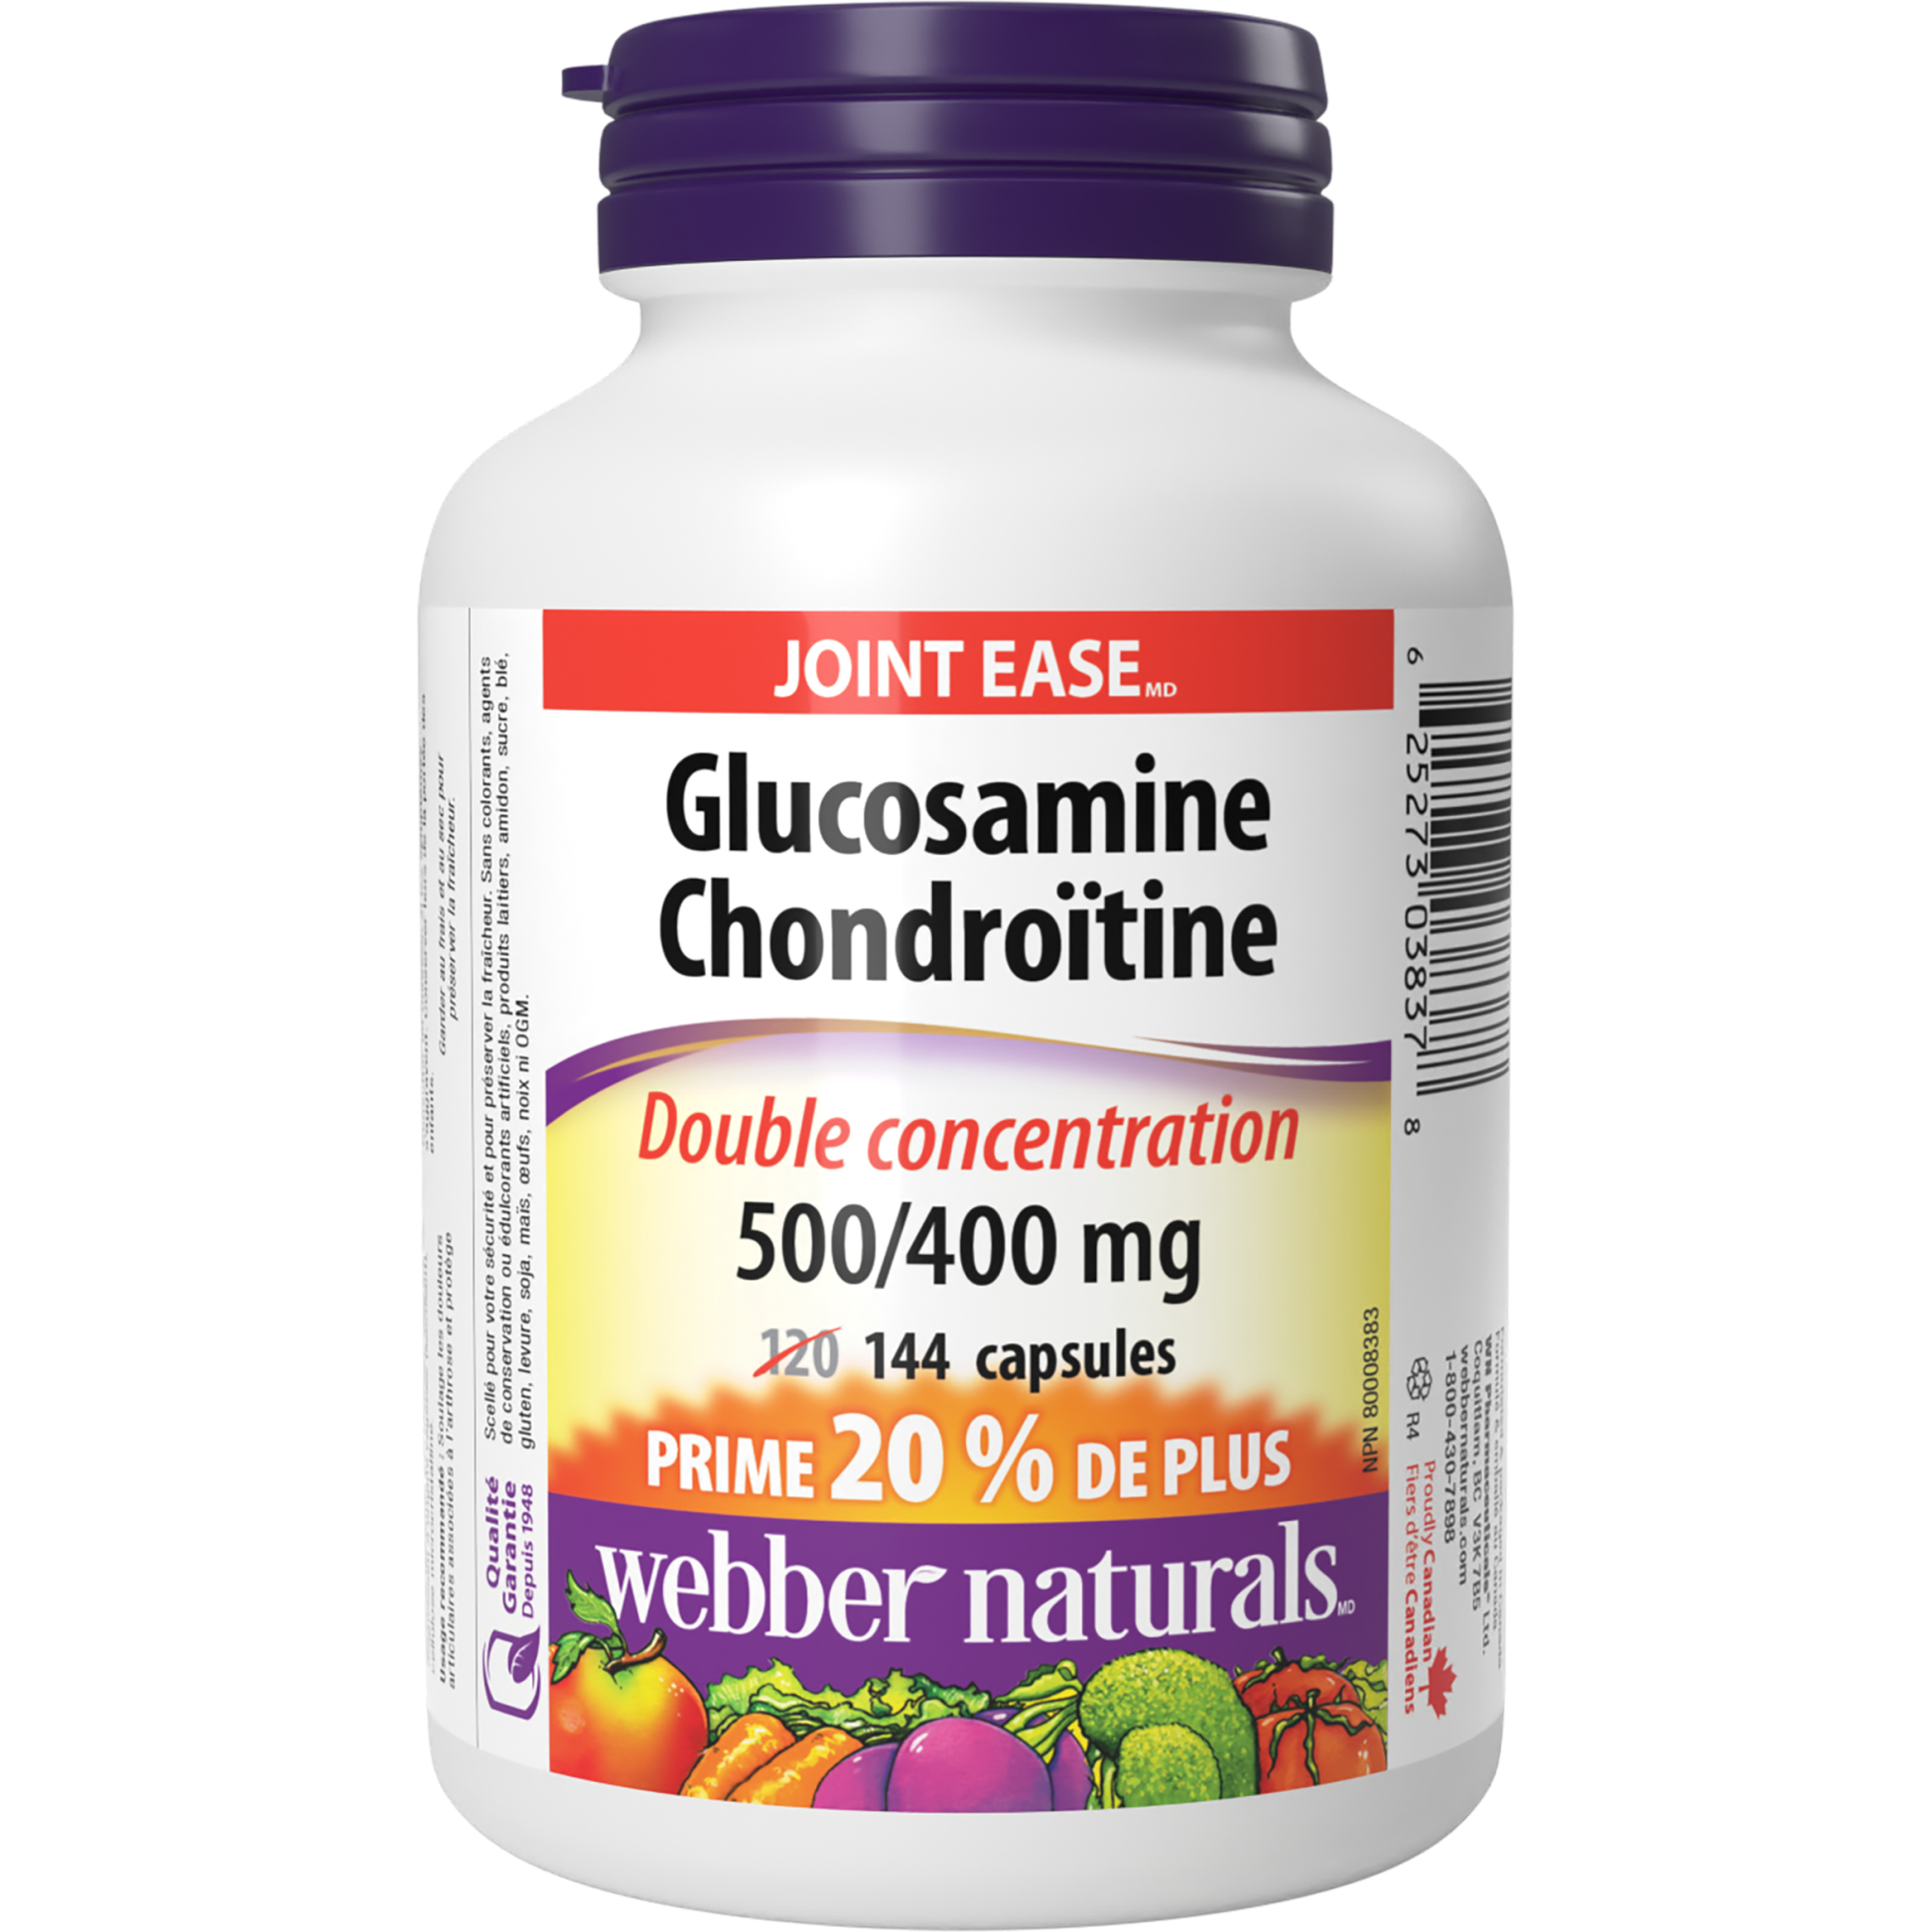 Glucosamine Chondroïtine Double concentration 500/400 mg for Webber Naturals|v|hi-res|WN3837